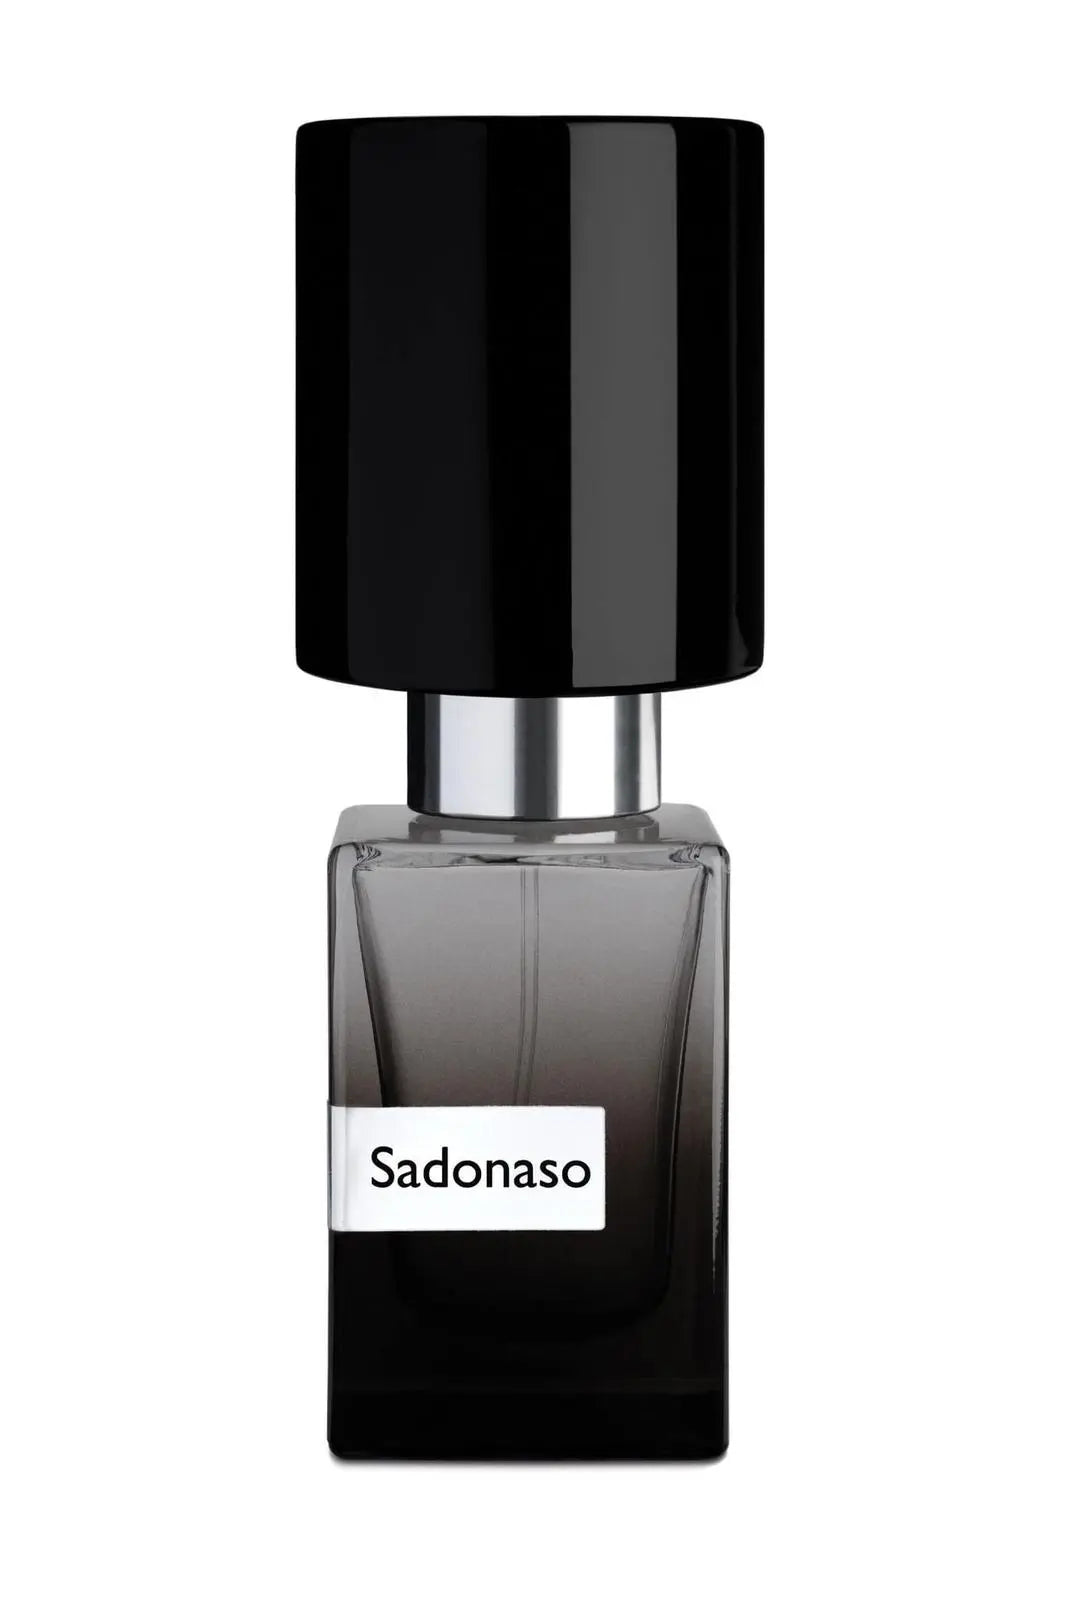 SADONASO Nasomatto Parfümextrakt – 30 ml LIMITED EDITION (Kappe)